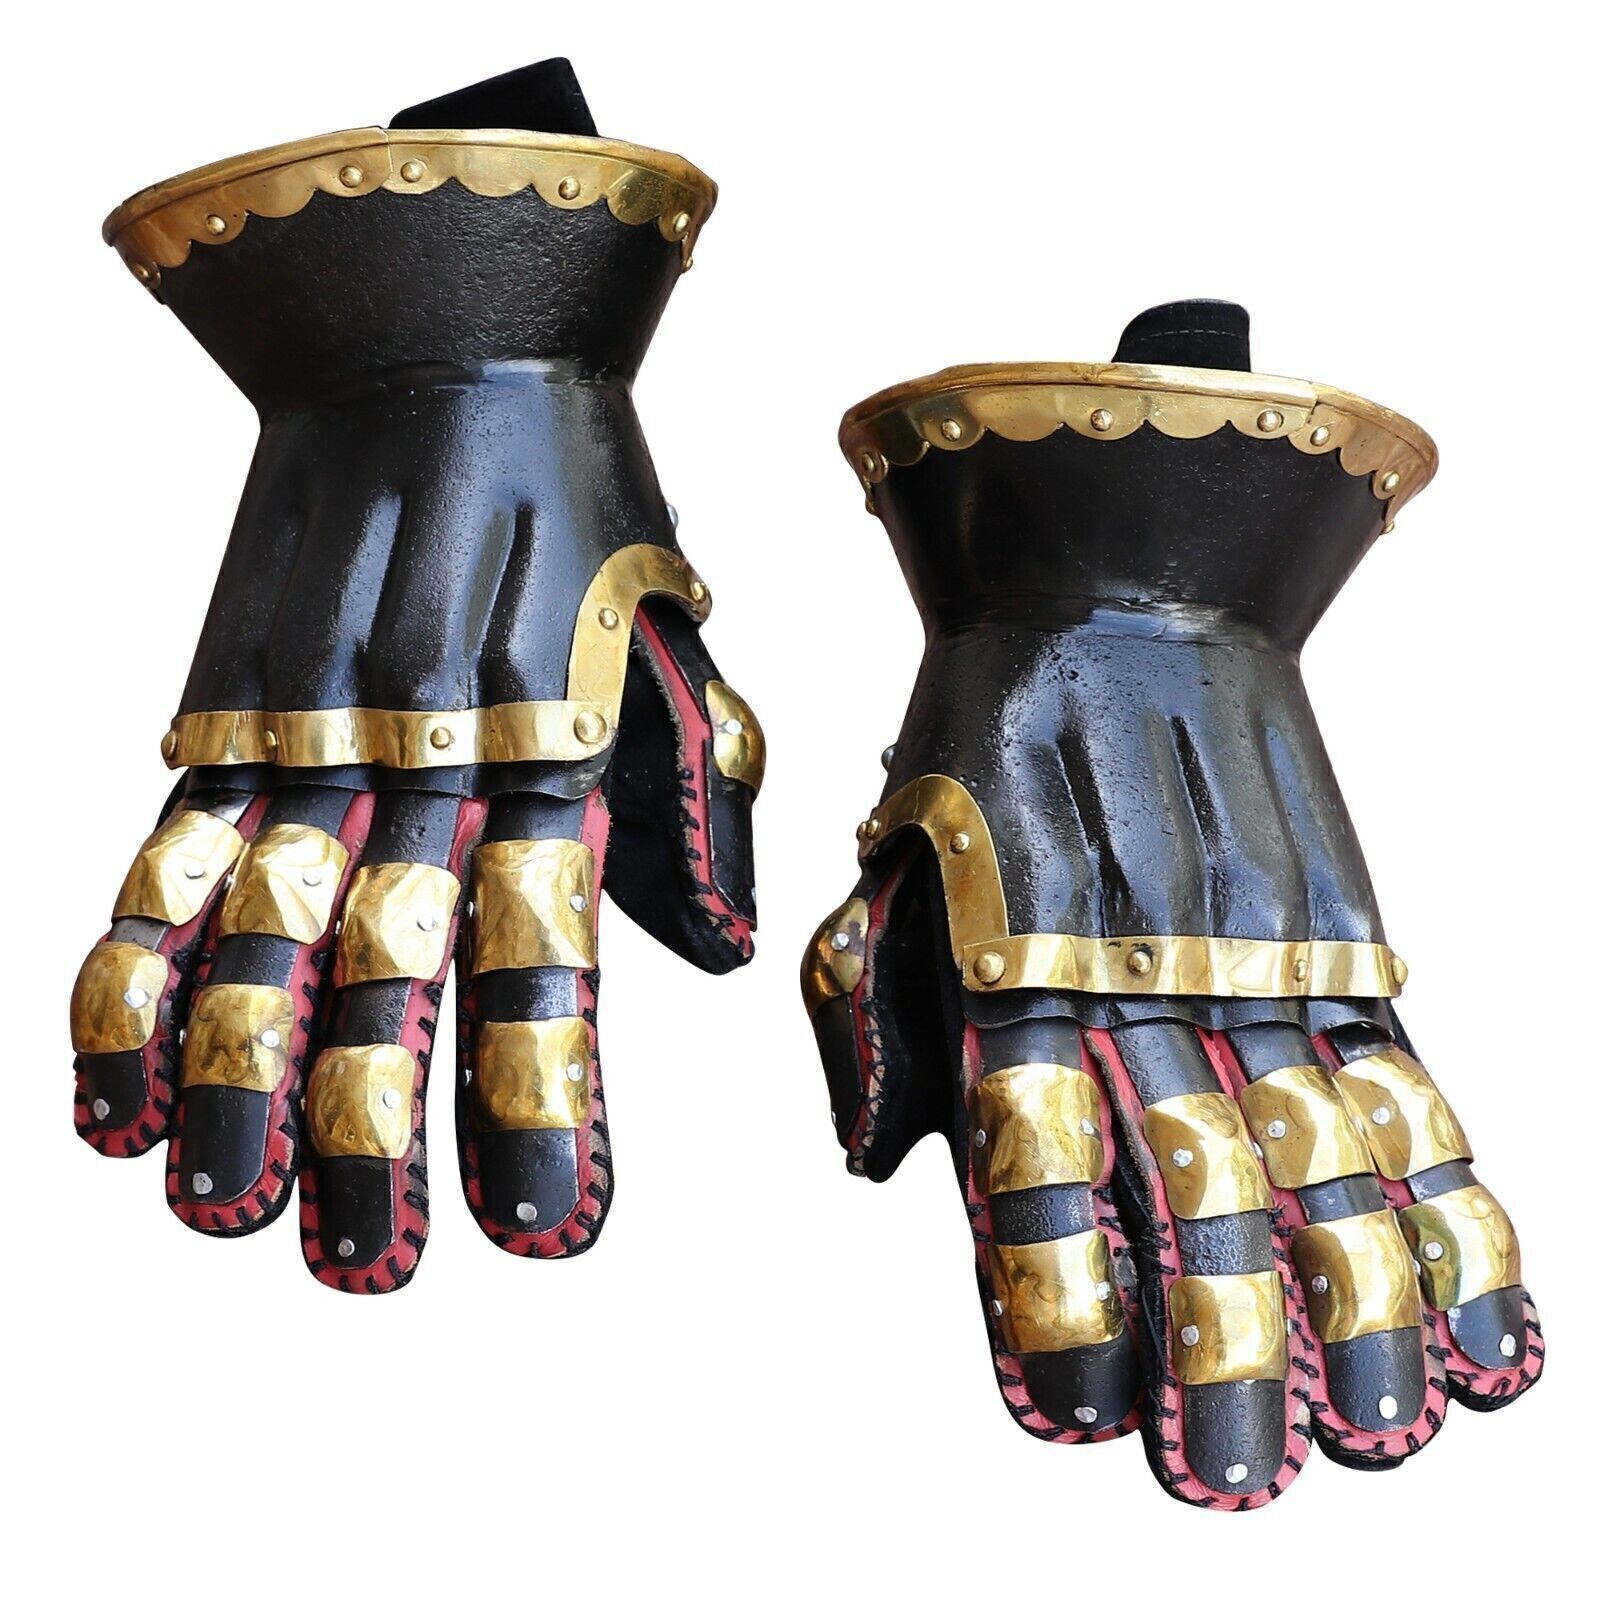 The Cursed Black Knight Functional Steel Practice Medieval Armor Gauntlet Gloves